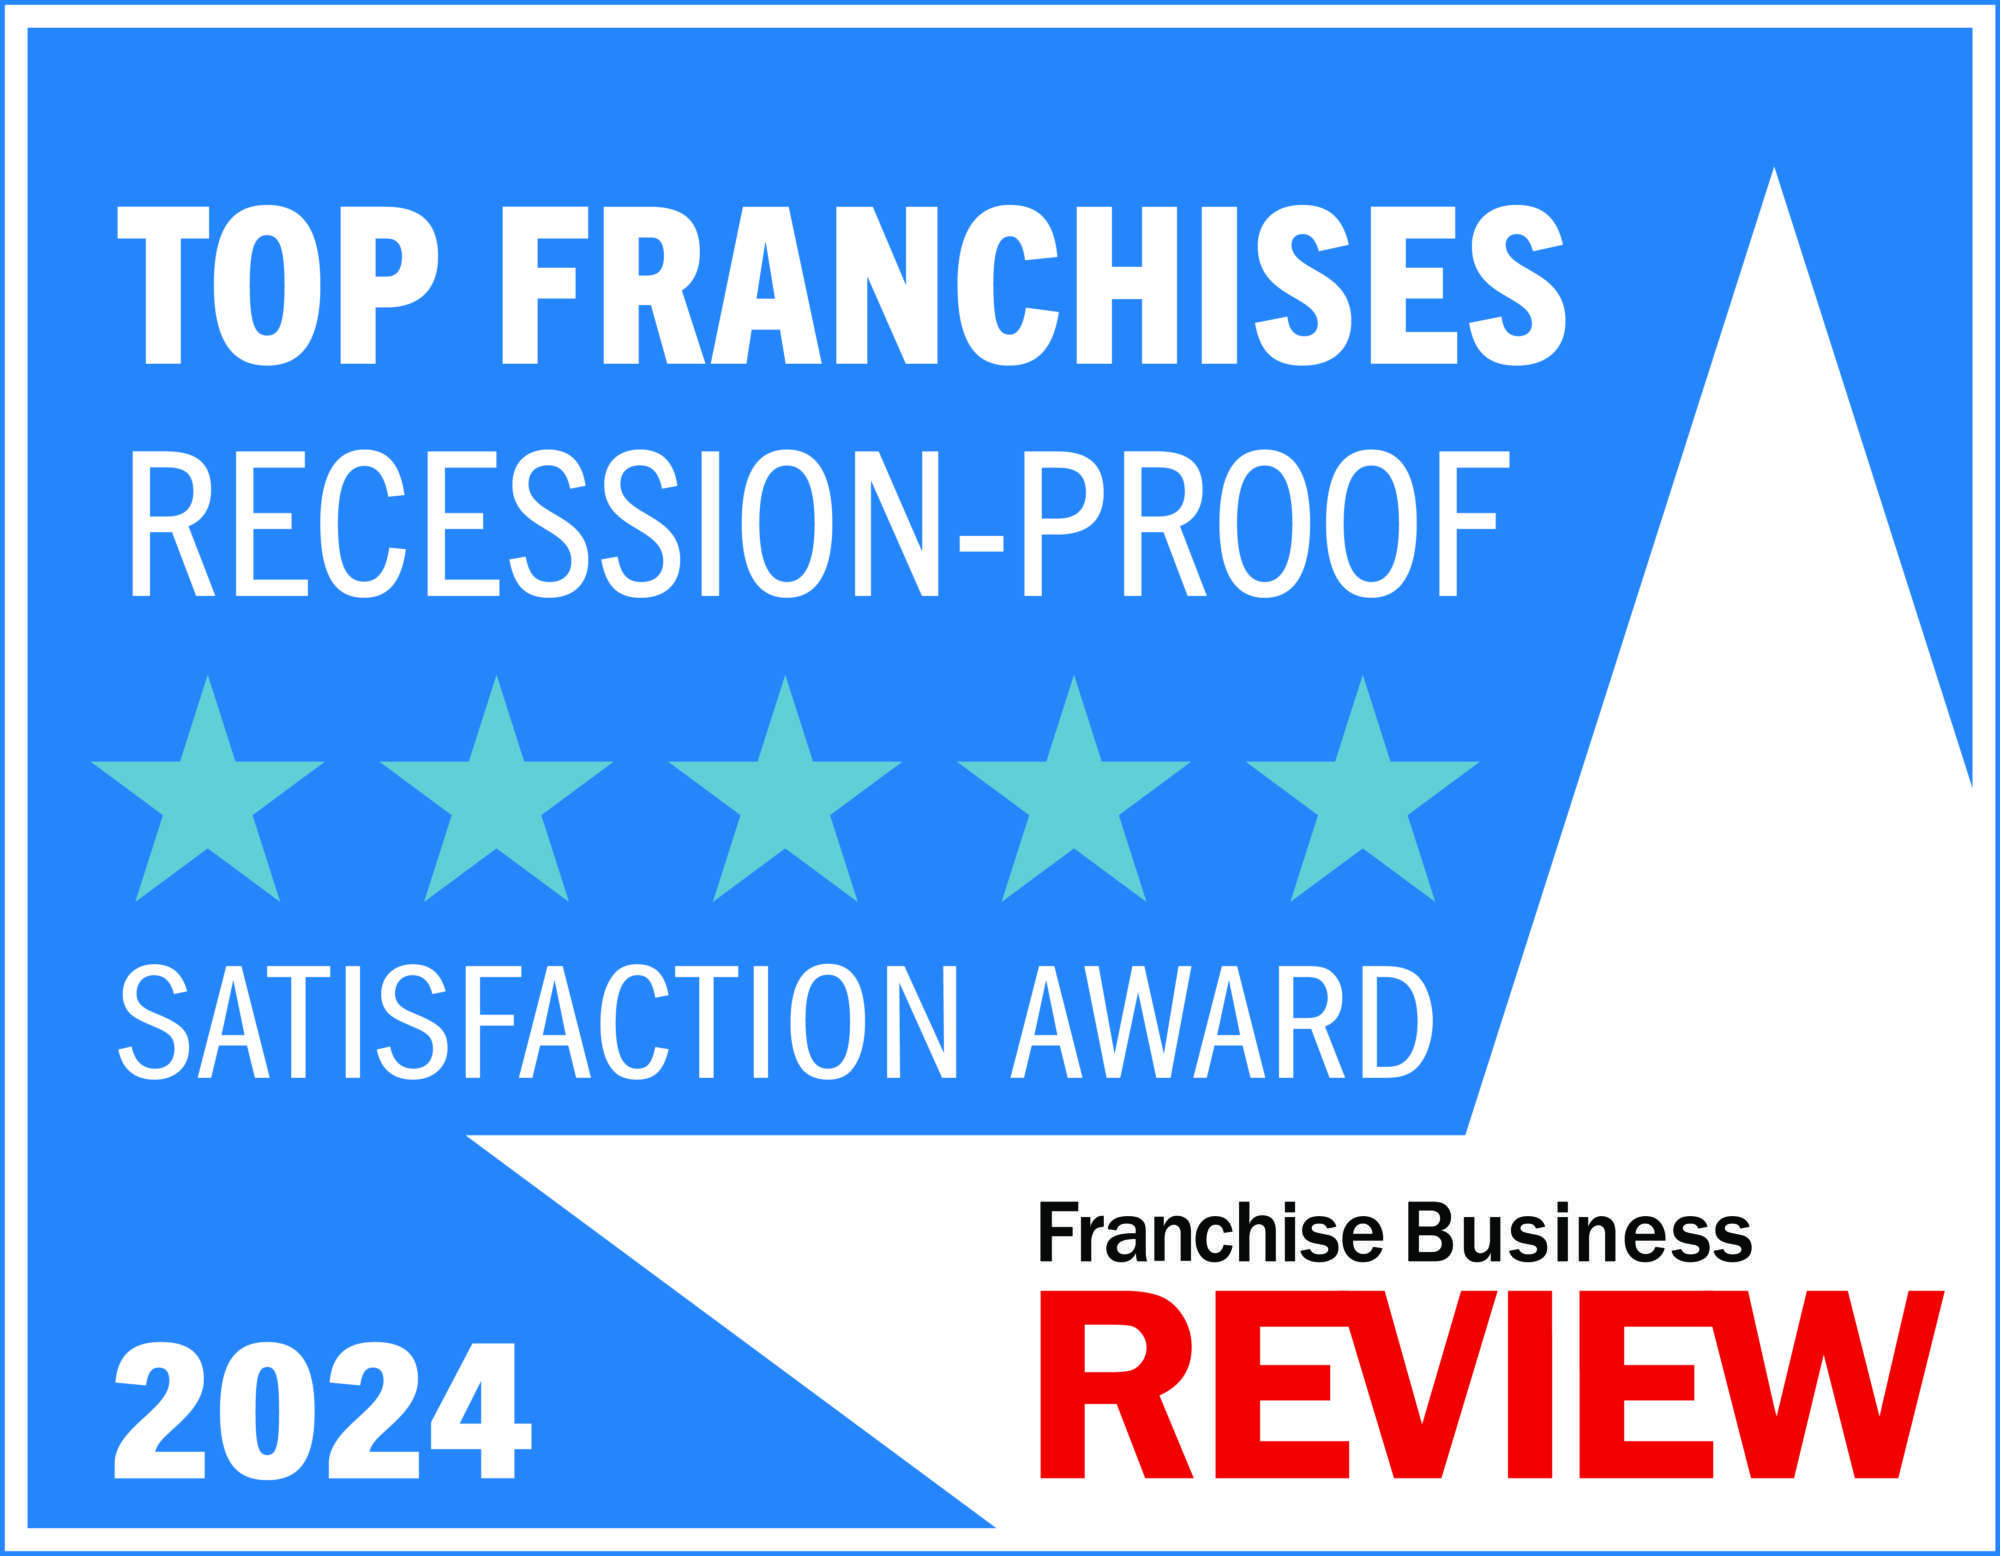 Franchise Business Review - Top Franchises Recession-Proof, 2024